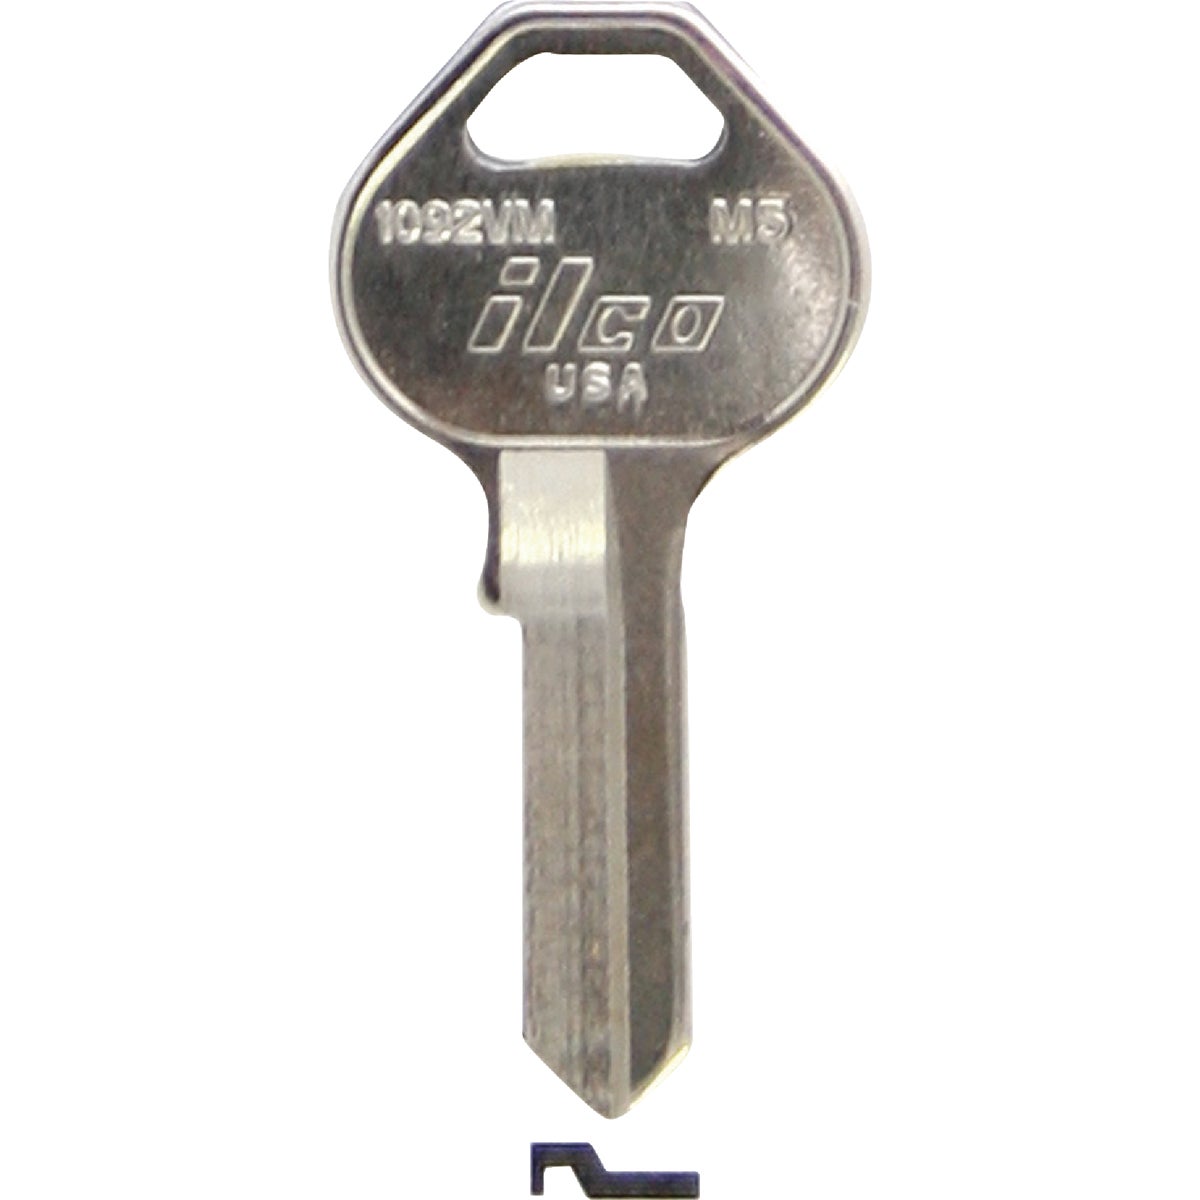 ILCO Master Nickel Plated Padlock Key M5 / 1092VM (10-Pack)